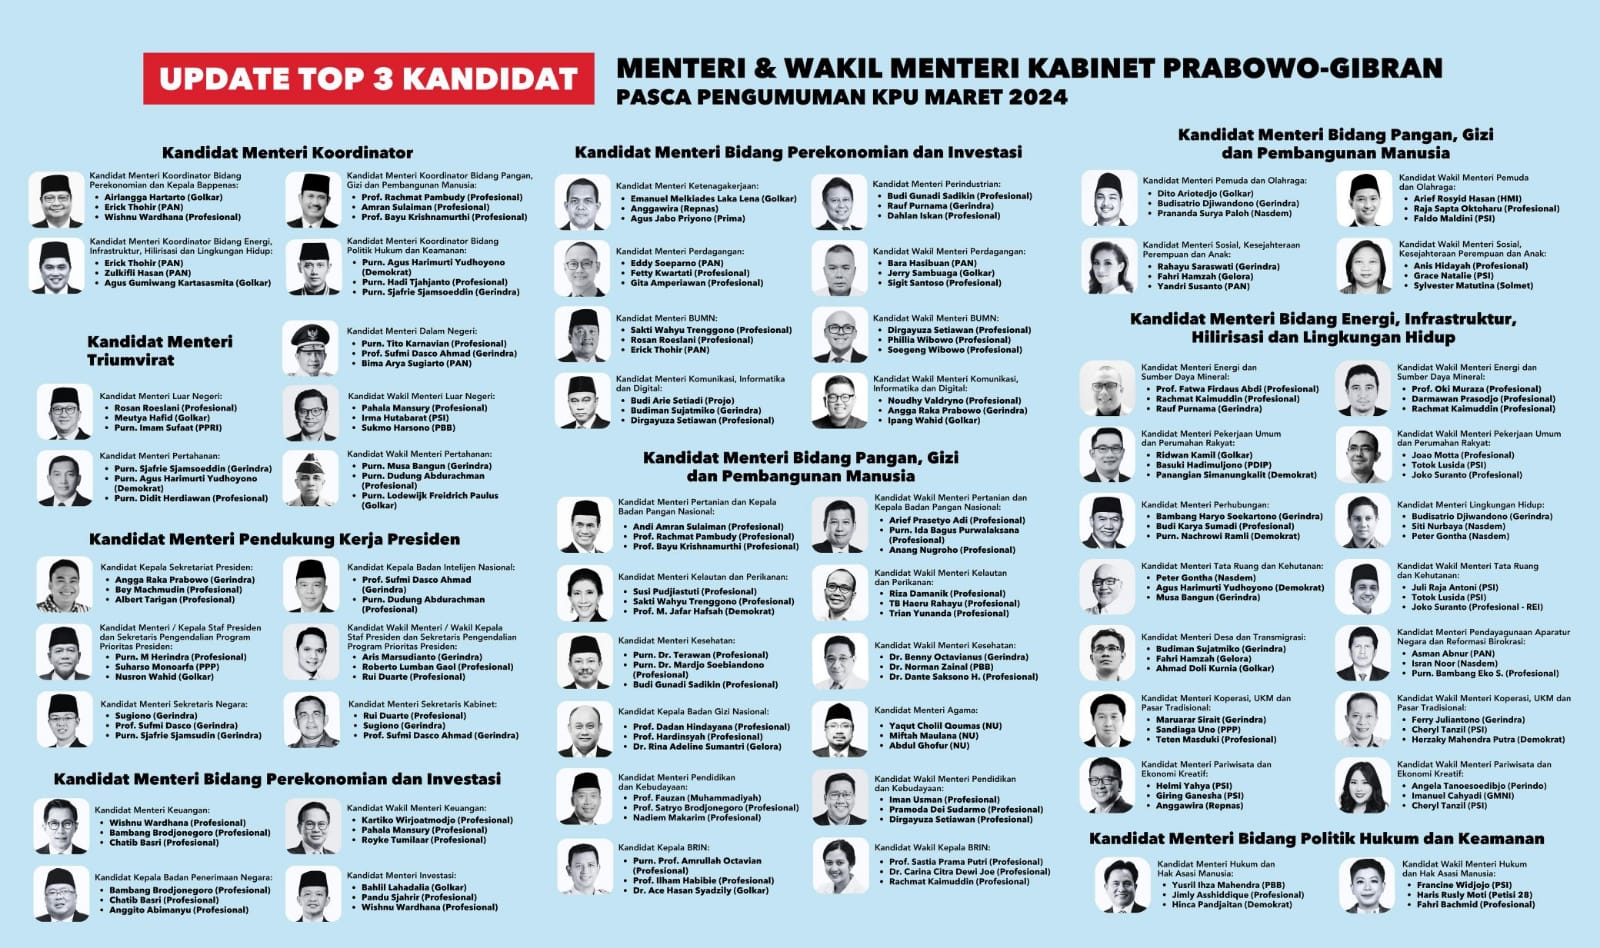 Viral Daftar Kandidat Menteri dan Wamen Prabowo-Gibran, Ada 12 Nama Kader Partai Golkar Tercantum